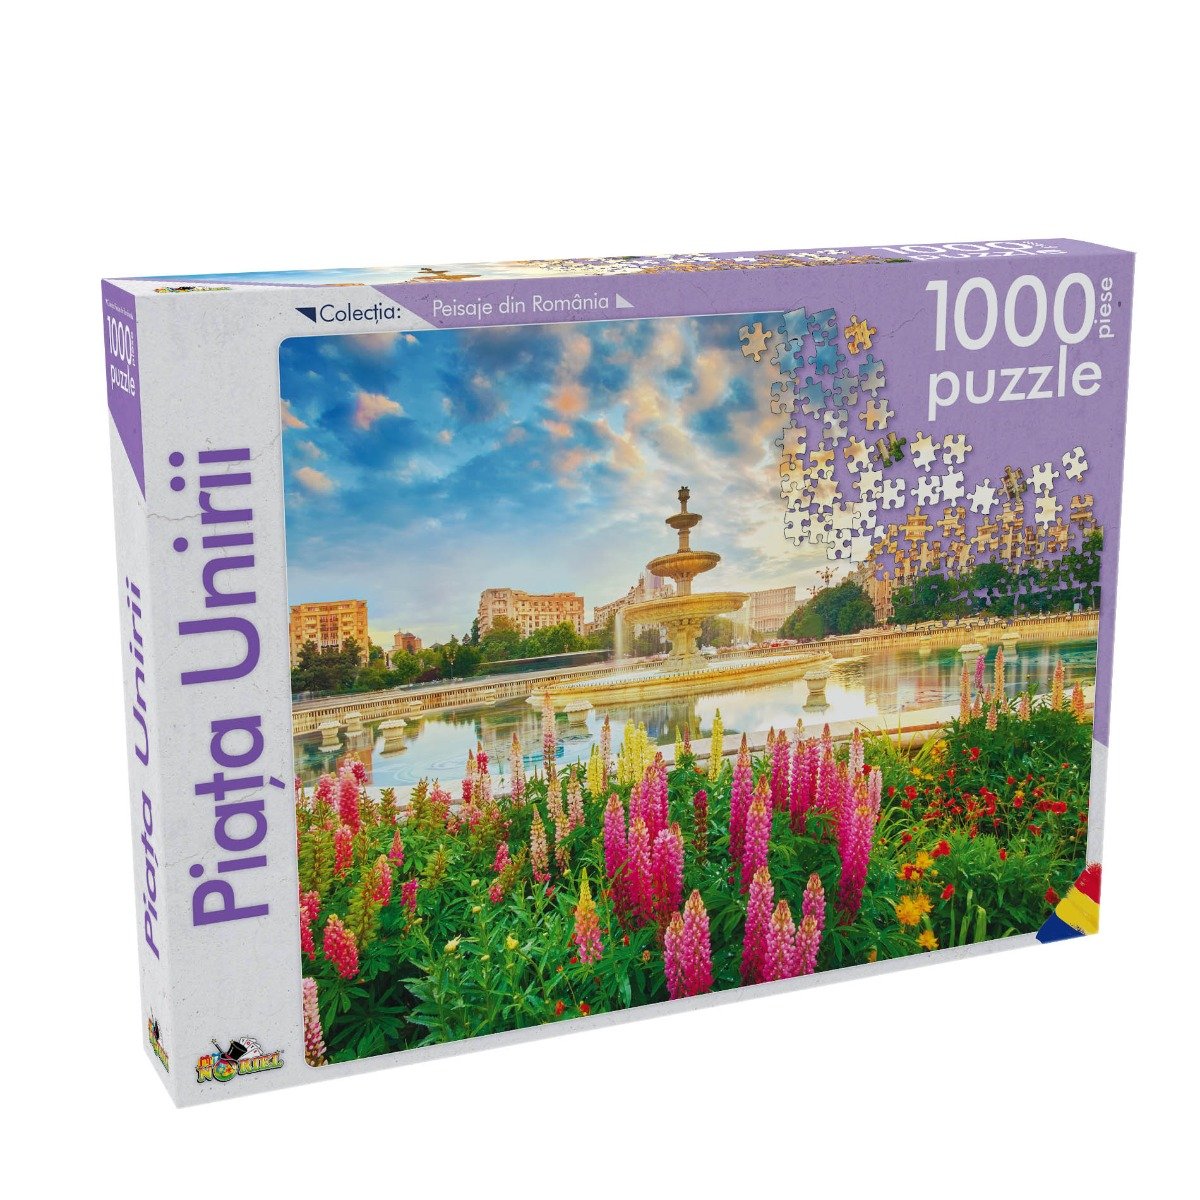 Puzzle Noriel – Peisaje din Romania – Piata Unirii, 1000 Piese (1000